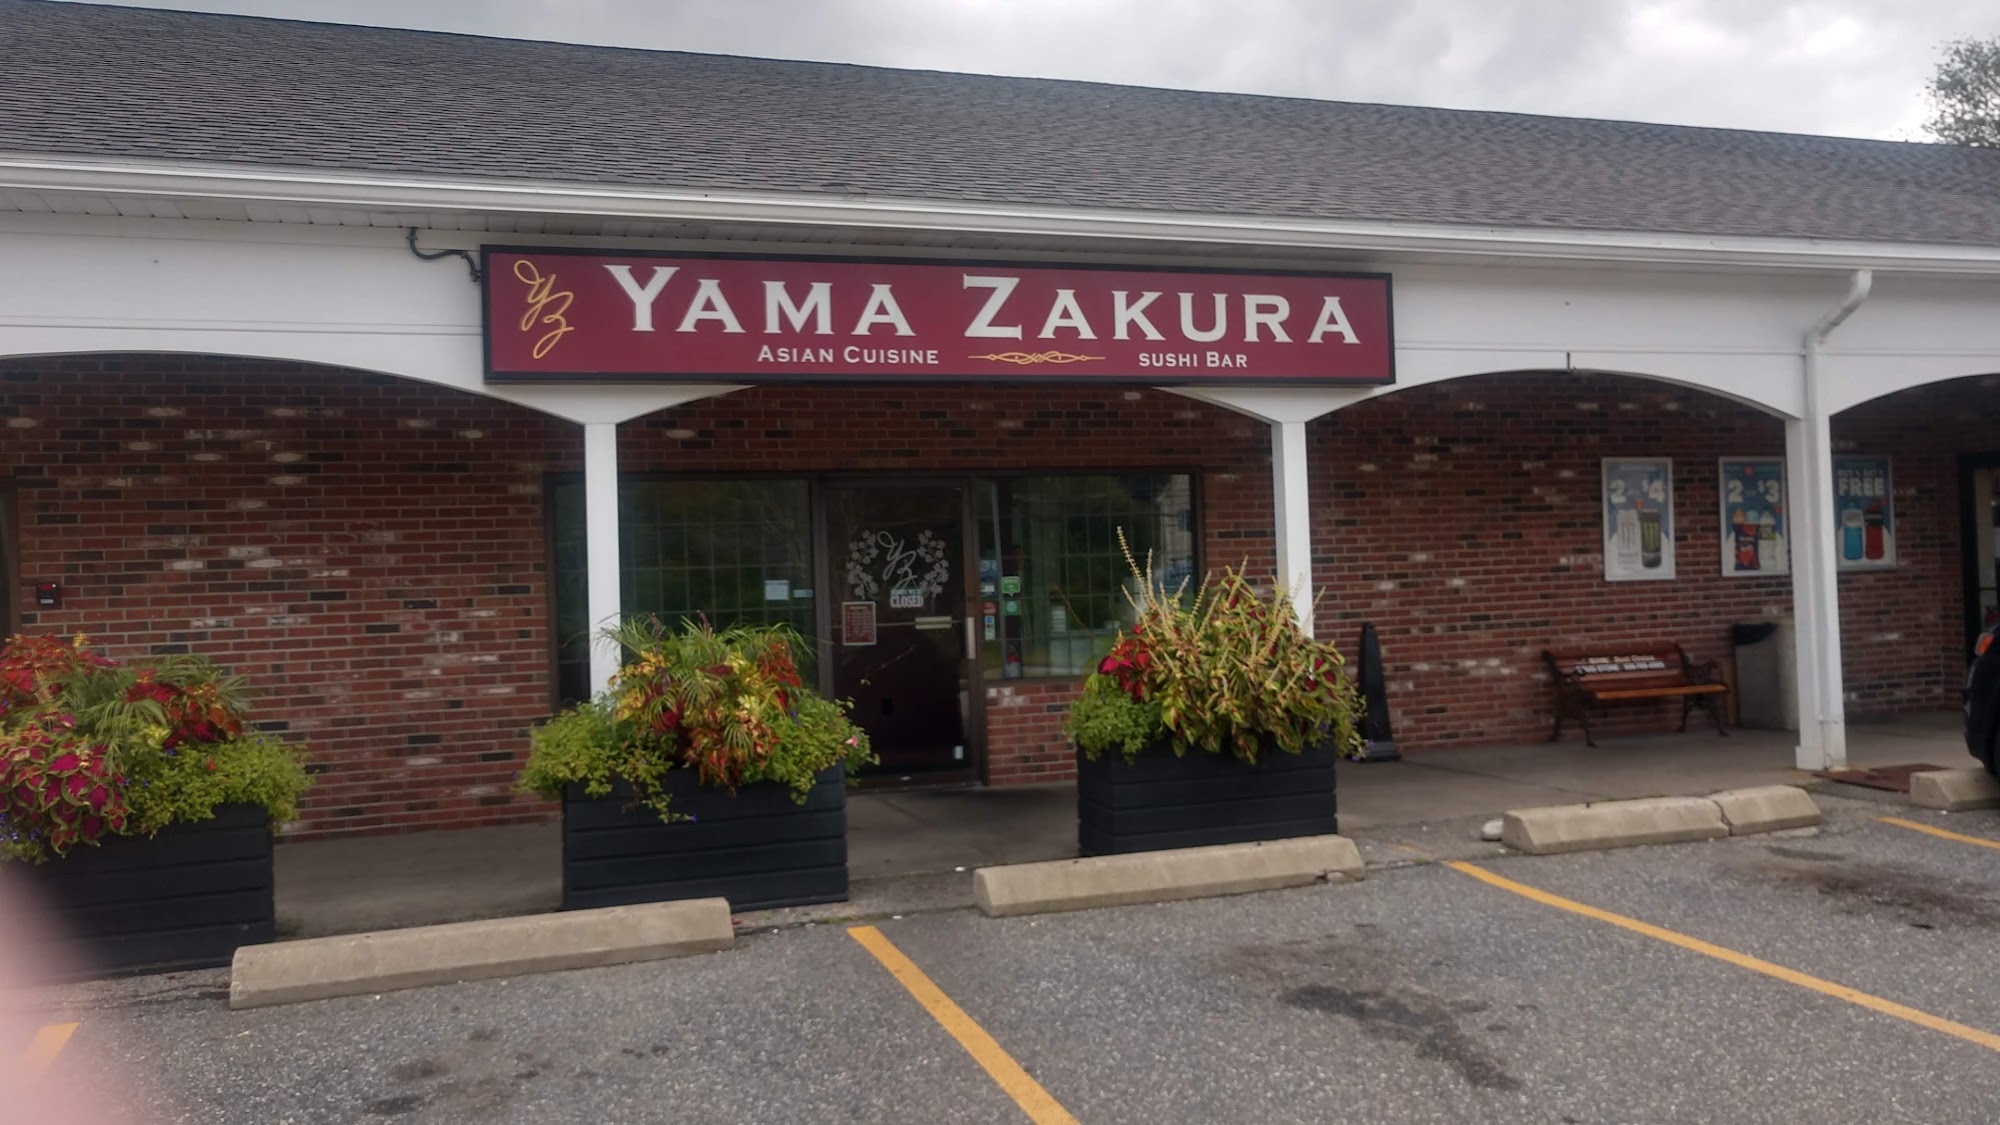 Yama Zakura